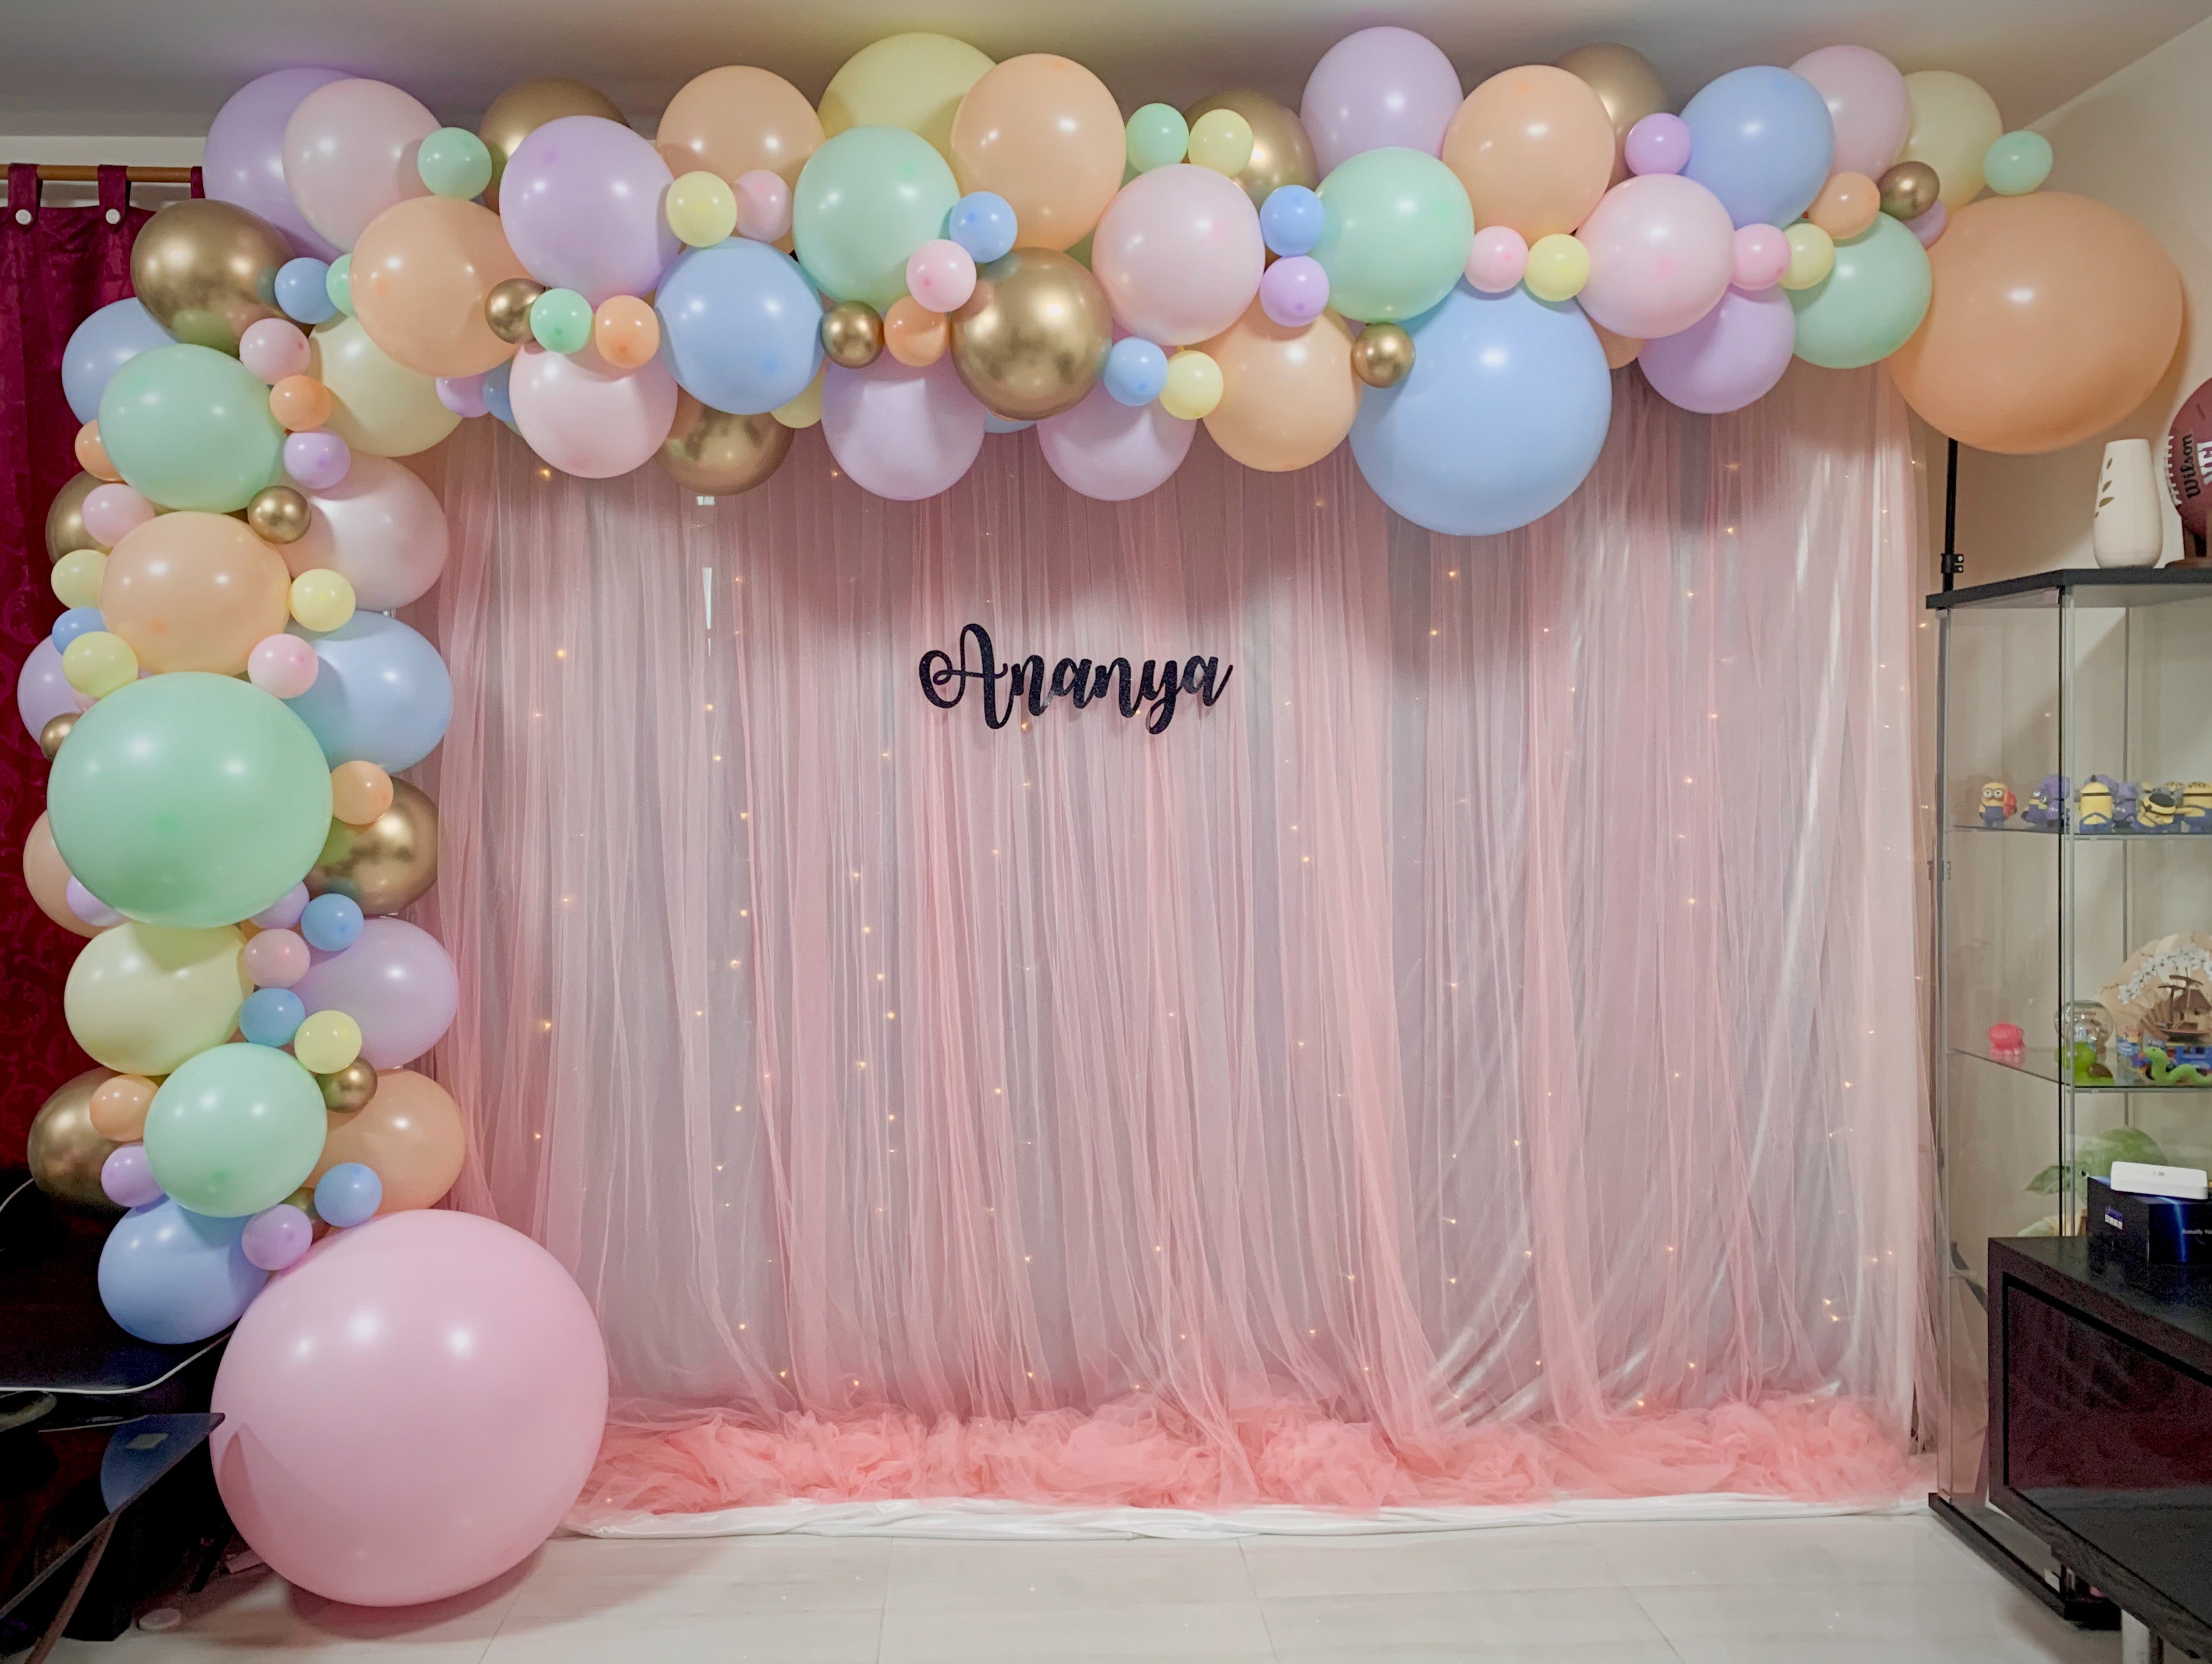 XL Signature Balloon Garland on Curtain Backdrop